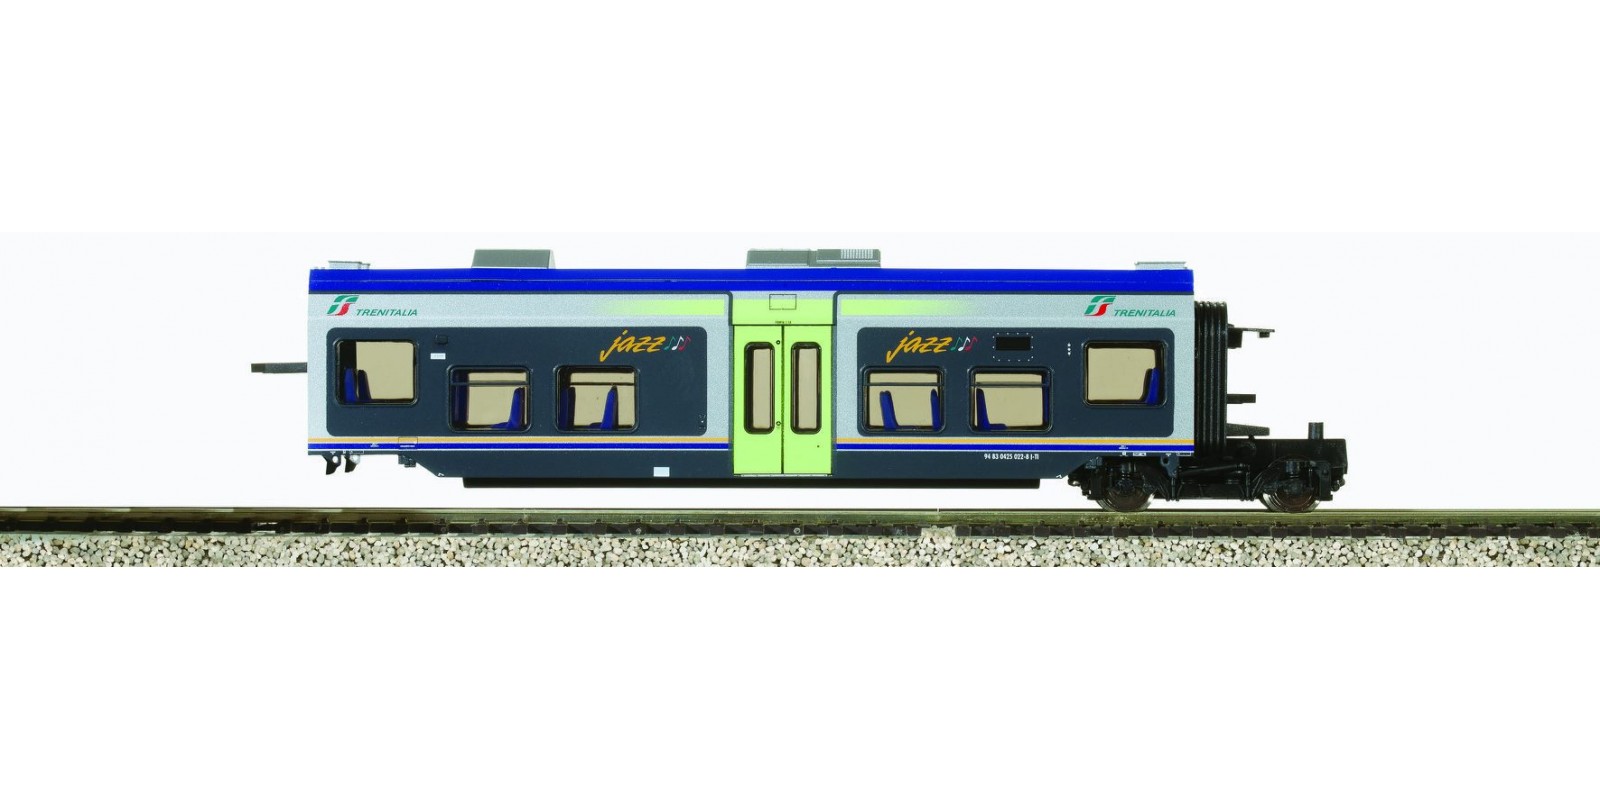 ViT1065/1 Wagon A42 for the ETR 425 Trenitalia Jazz train